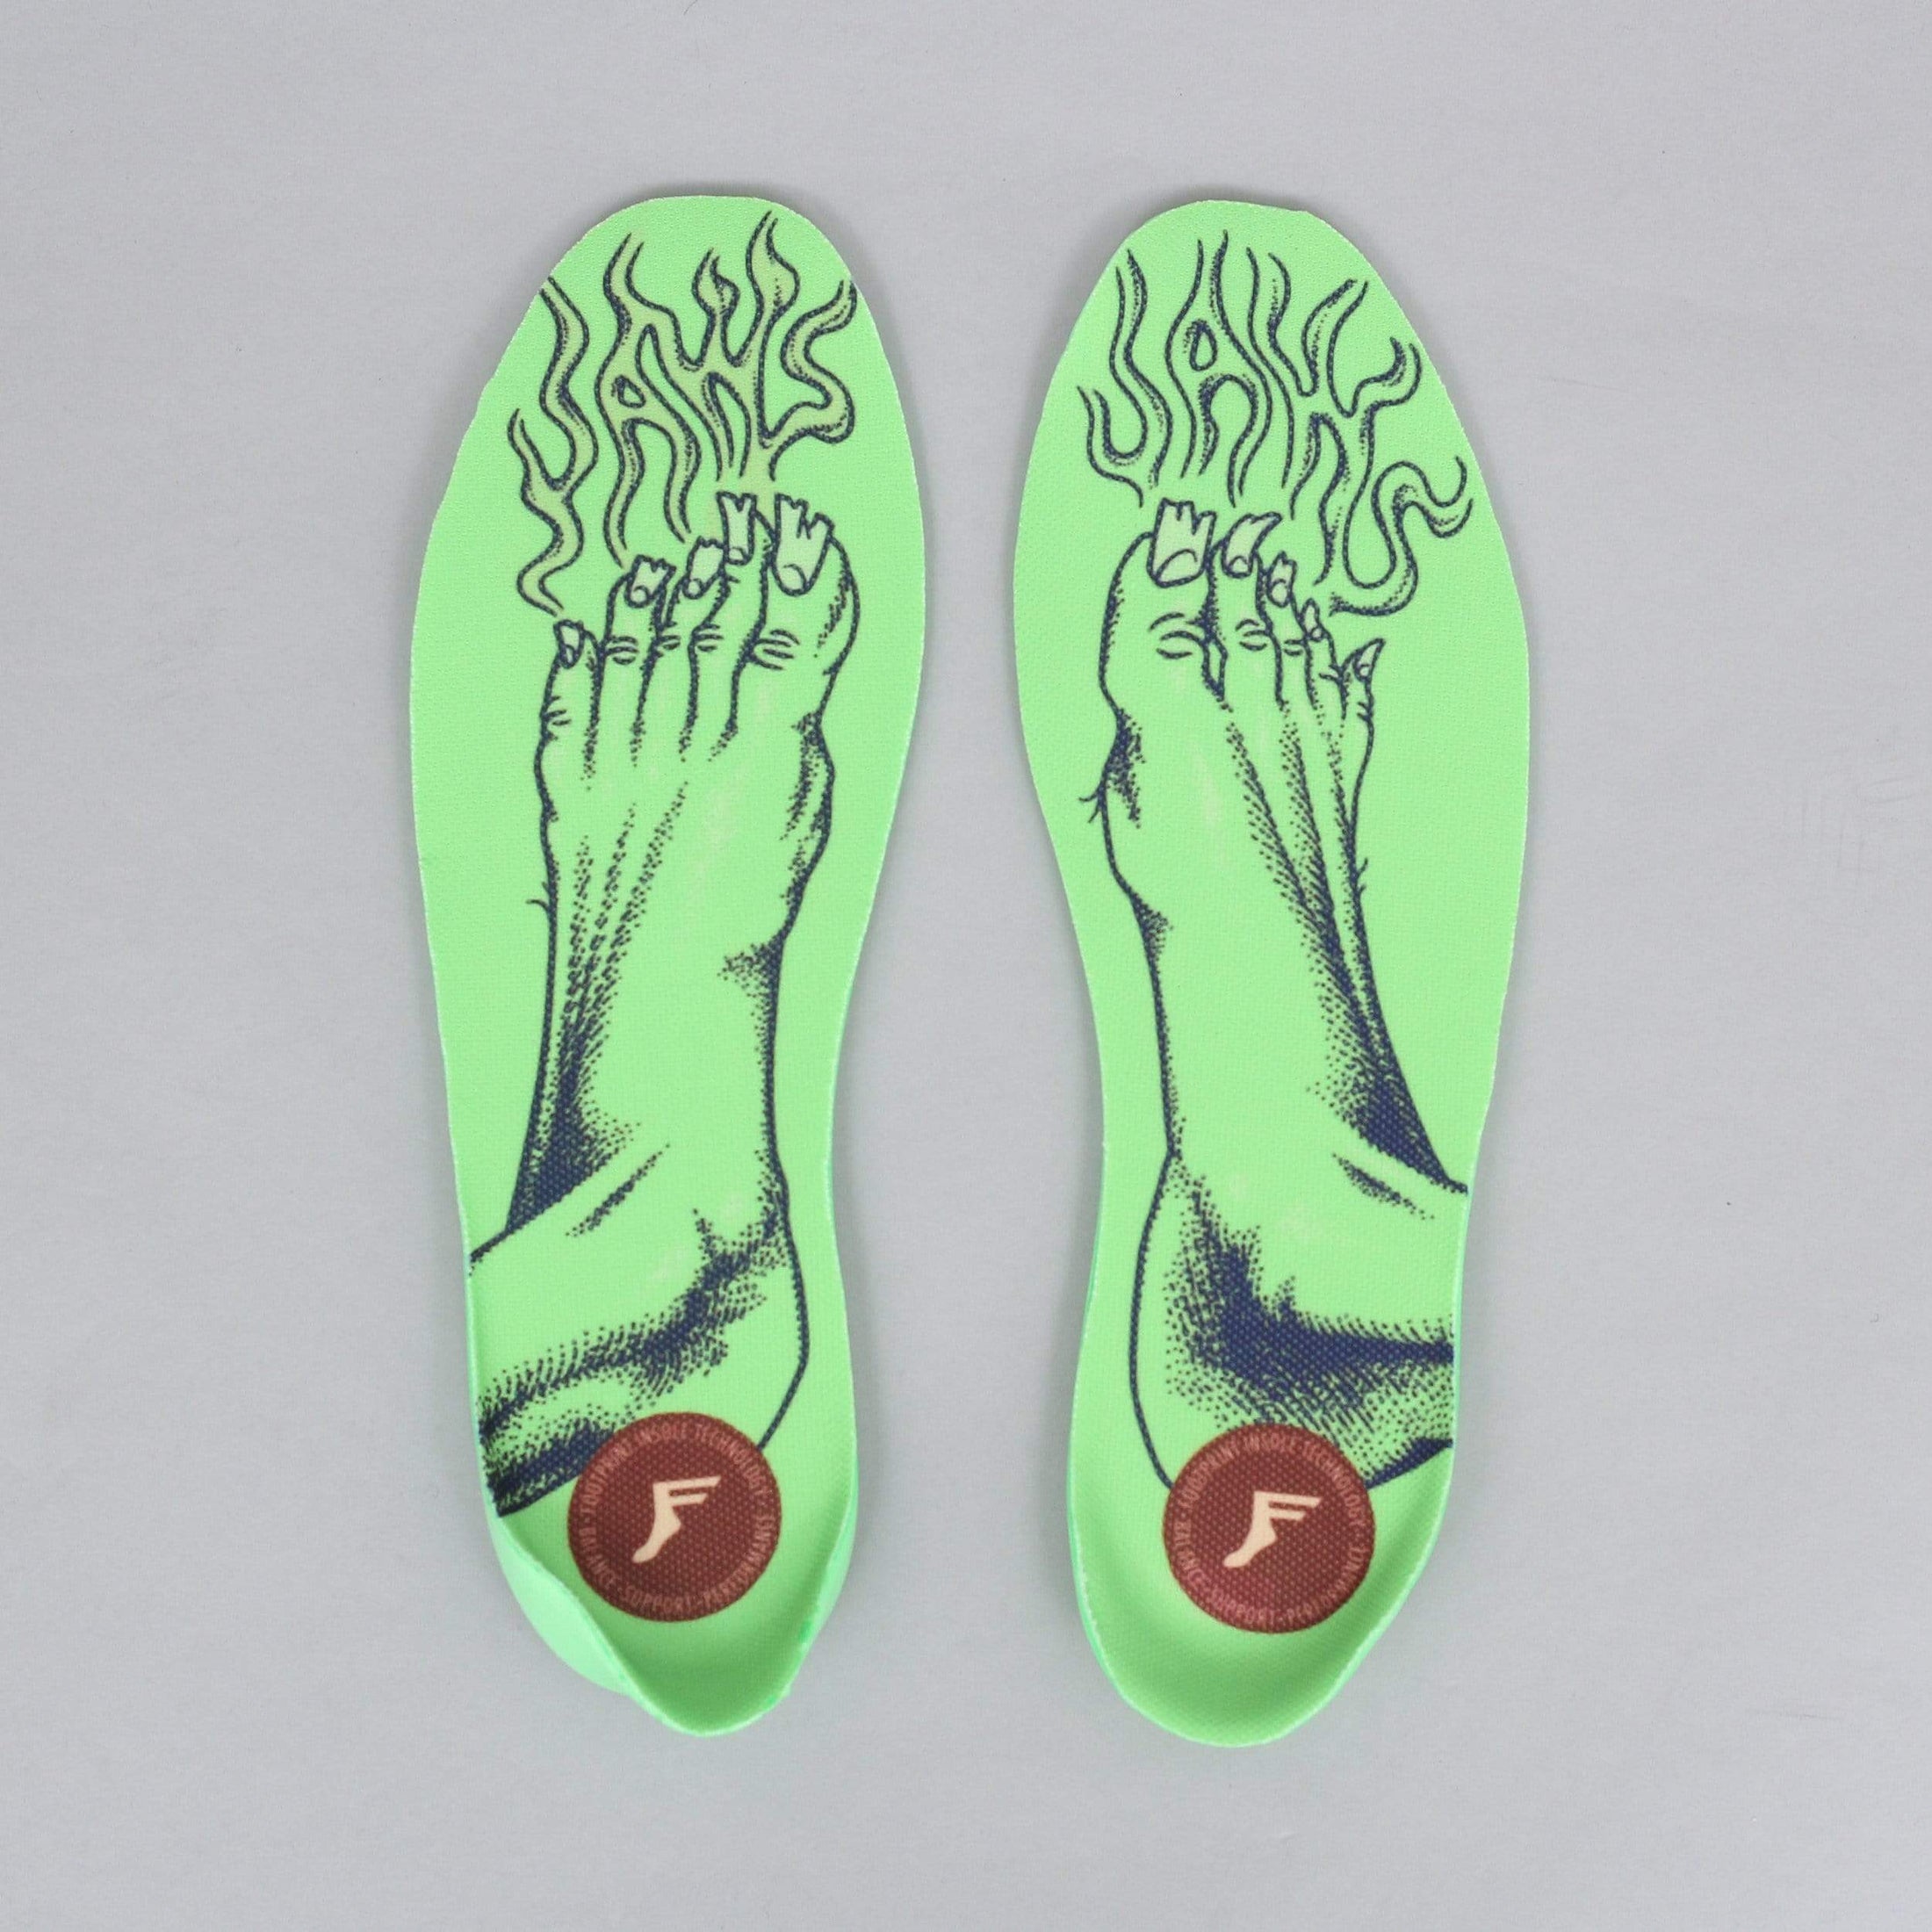 Footprint Kingfoam Elite High Mouldable Jaws Feet Insoles